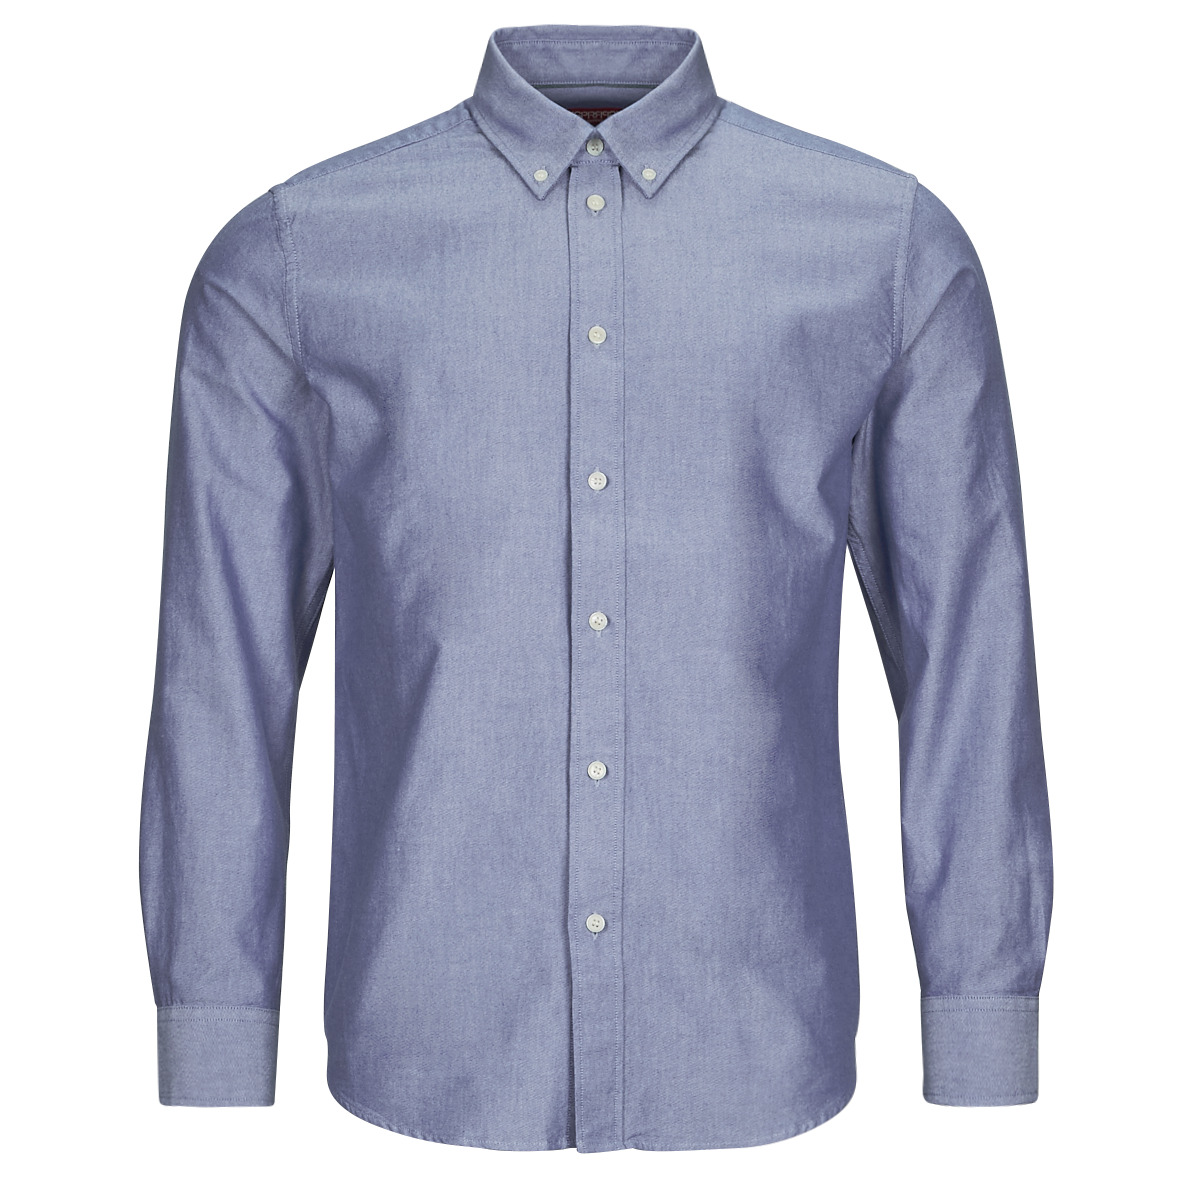 Esprit  Πουκάμισο με μακριά μανίκια Esprit oxford shirt